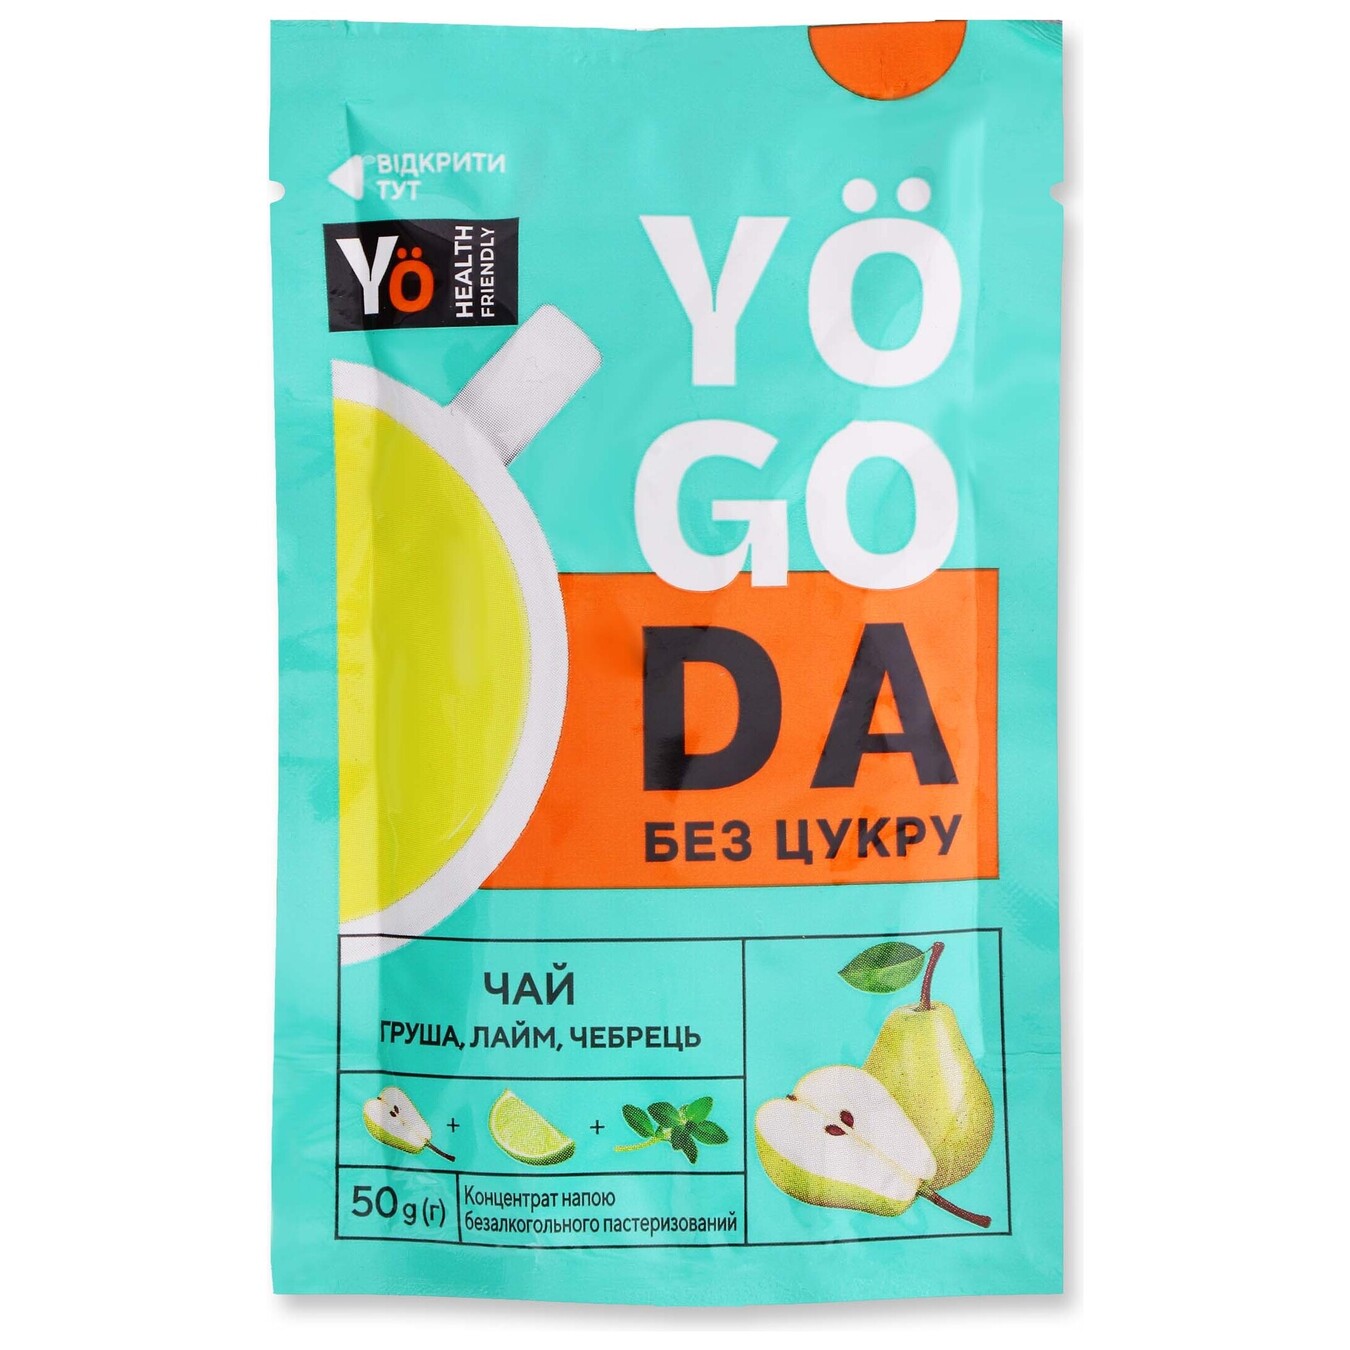 Tea concentrate Yogoda pear-lime-thyme 50g